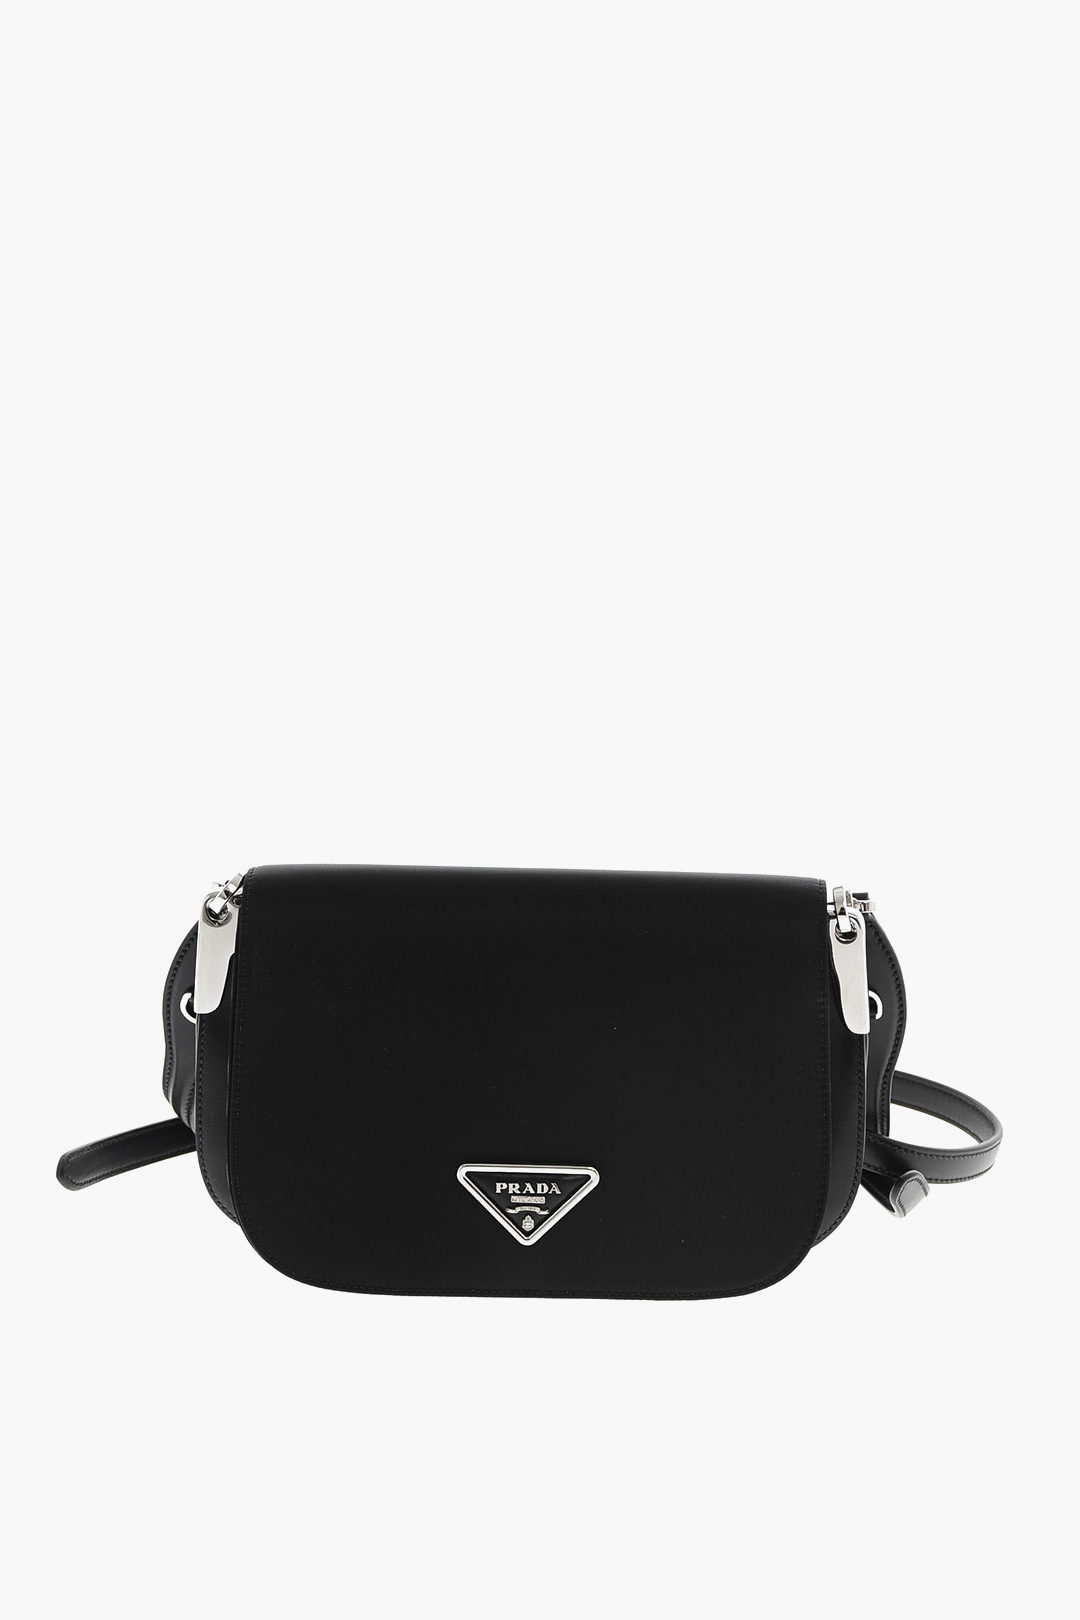 Prada Saffiano Leather PATTINA Shoulder Bag women - Glamood Outlet